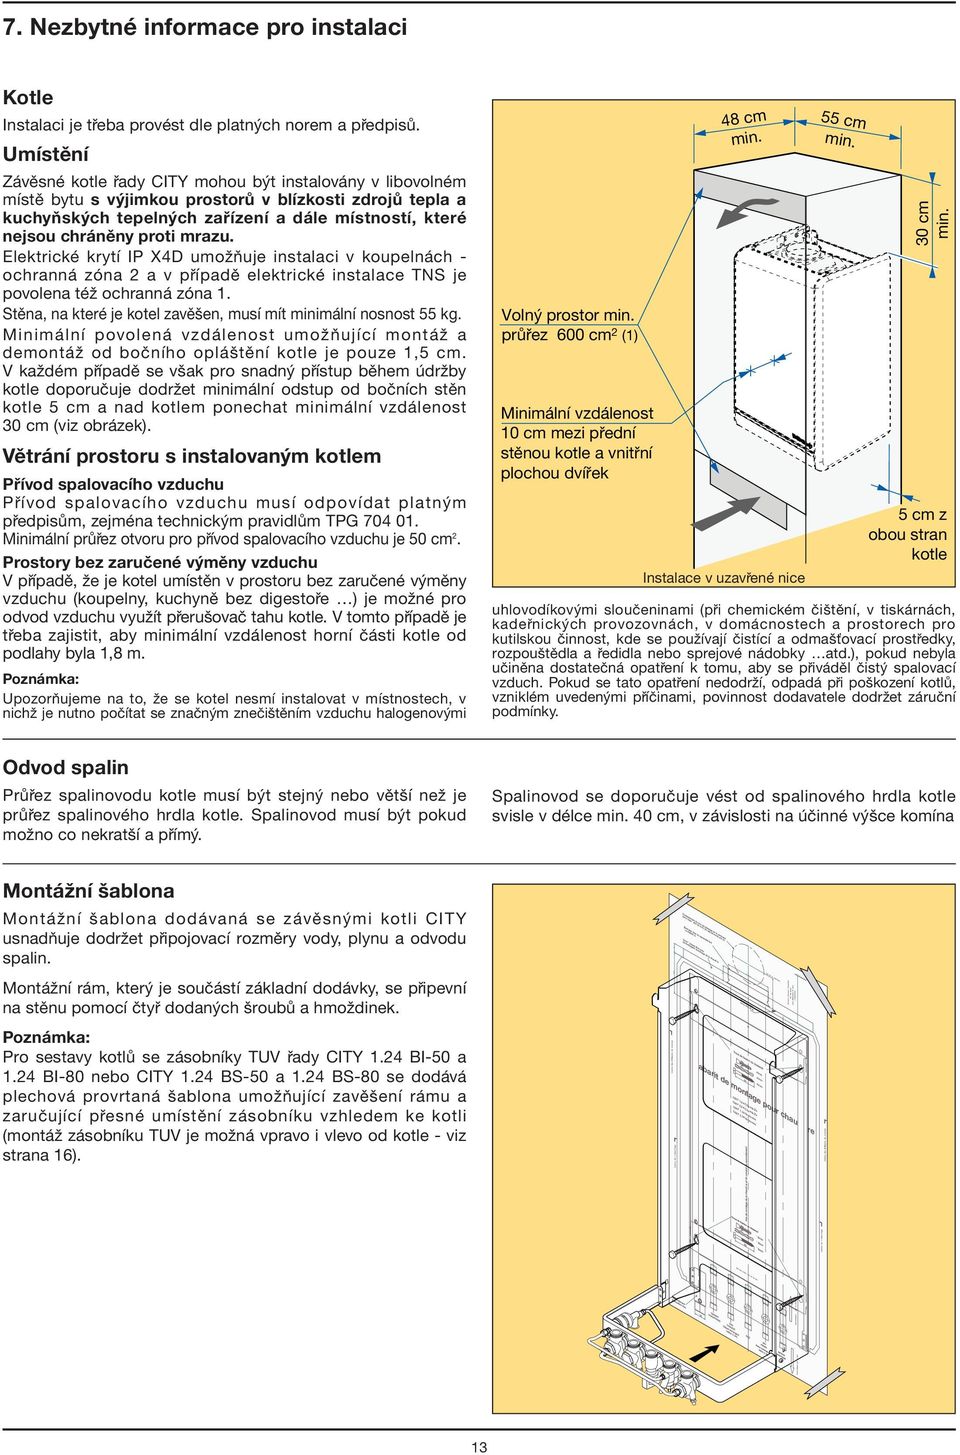 mrazu. ElektrickÈ krytì IP X4D umoûúuje instalaci v koupeln ch - ochrann zûna 2 a v p ÌpadÏ elektrickè instalace TNS je povolena tèû ochrann zûna 1.